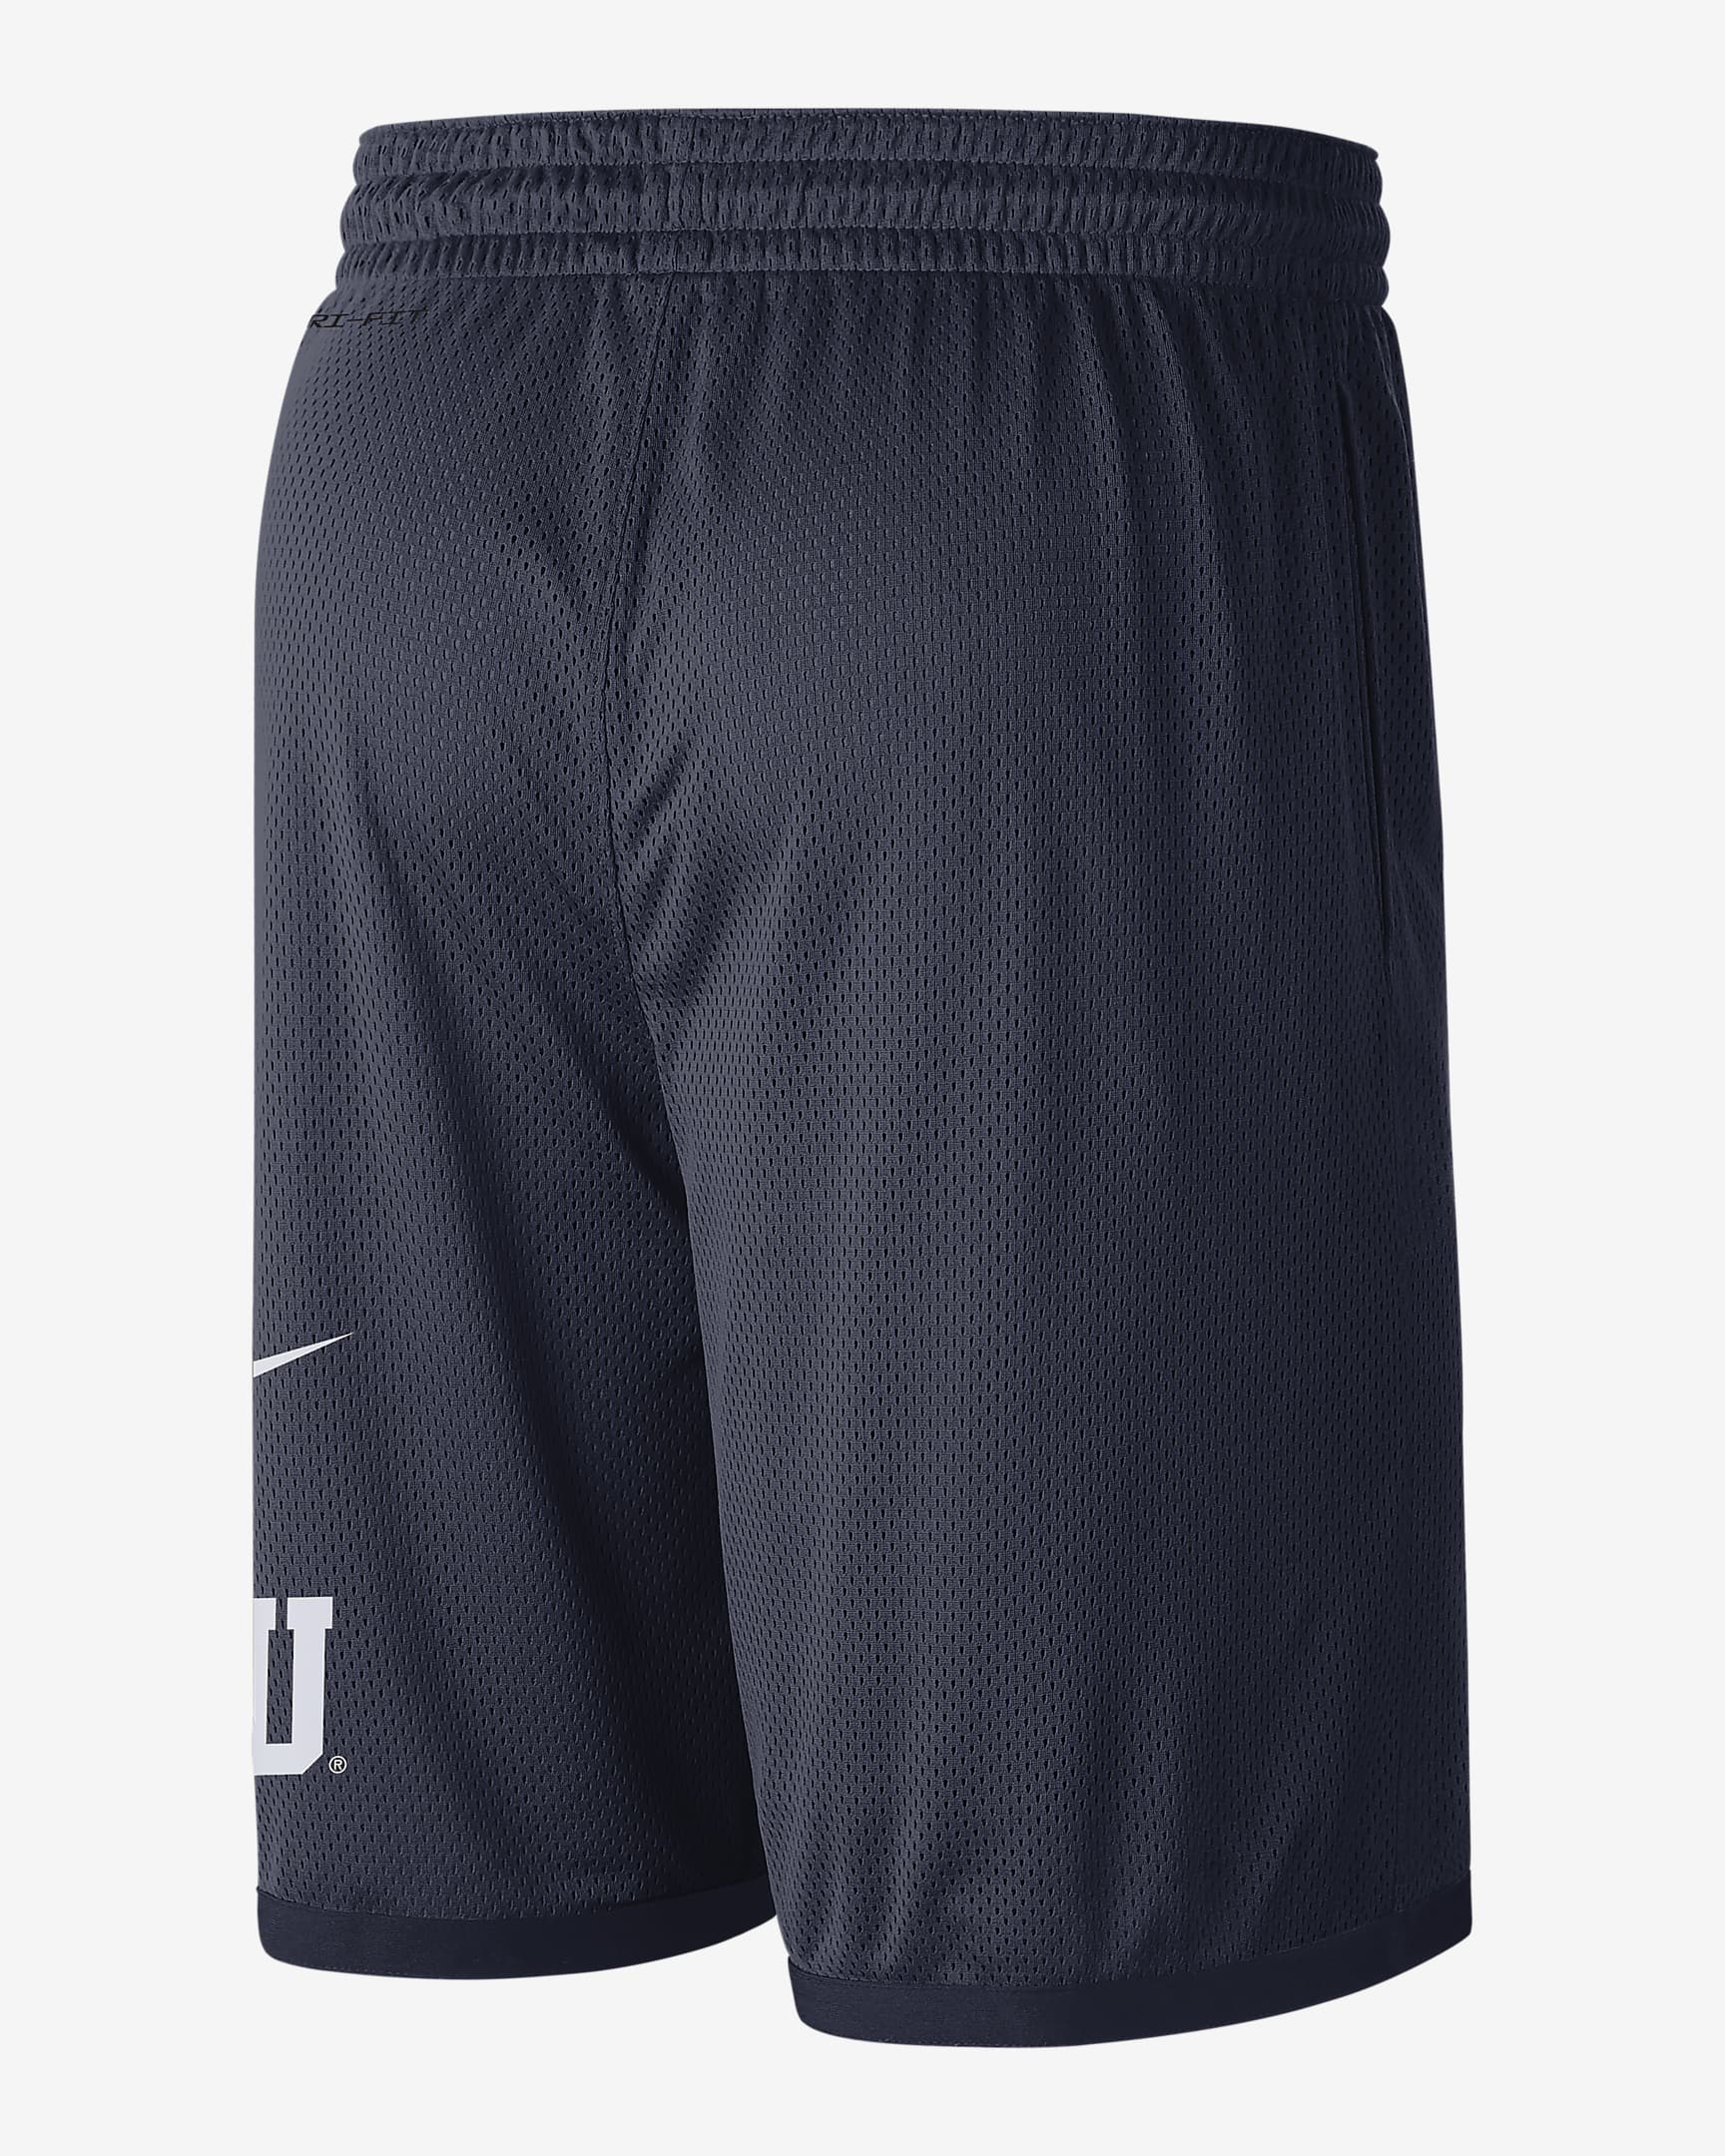 West Virginia Men's Nike Dri-FIT College Shorts. Nike.com